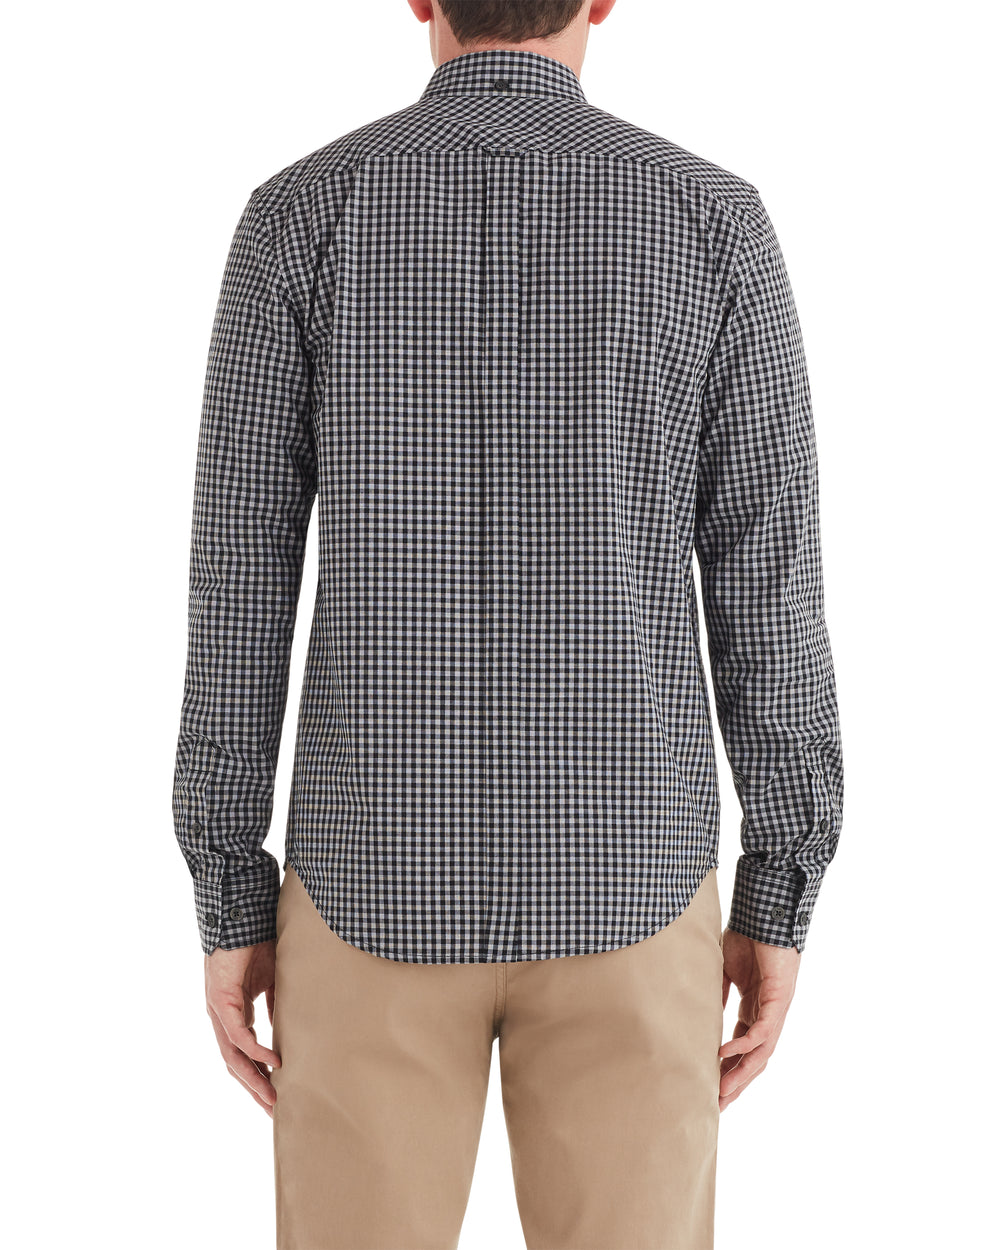 Long-Sleeve Gingham Shirt - Graphite Grey